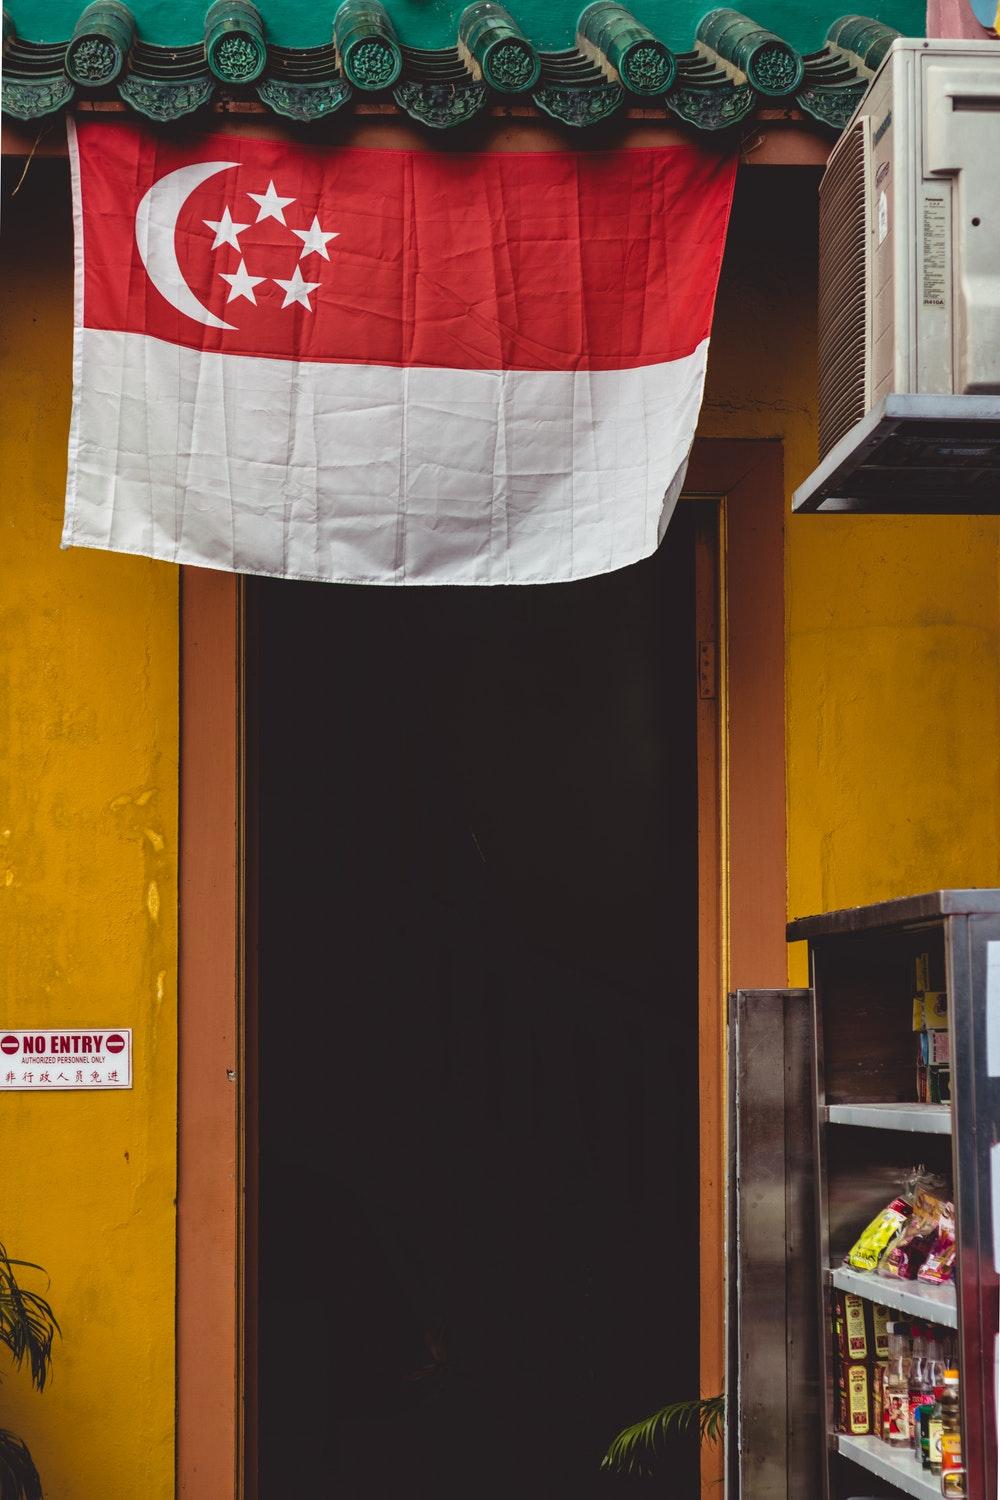 Singapore Flag Pictures